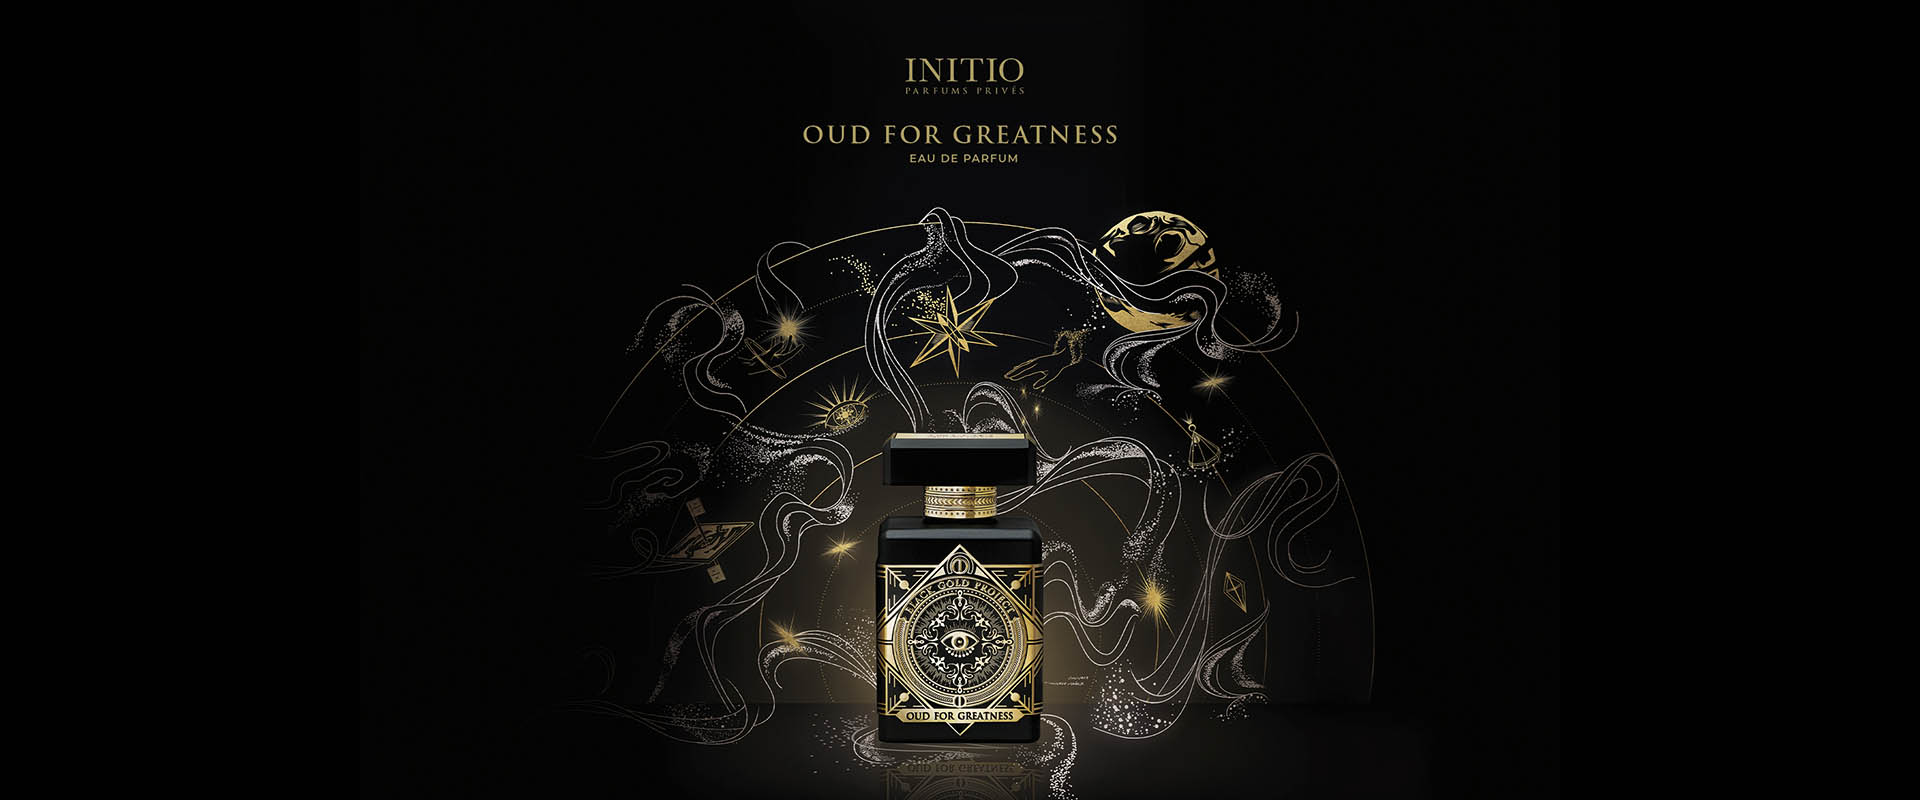 https://www.wolfprofumi.com/prodotto/initio-parfums-prives-oud-for-greatness-extrait-de-parfum/